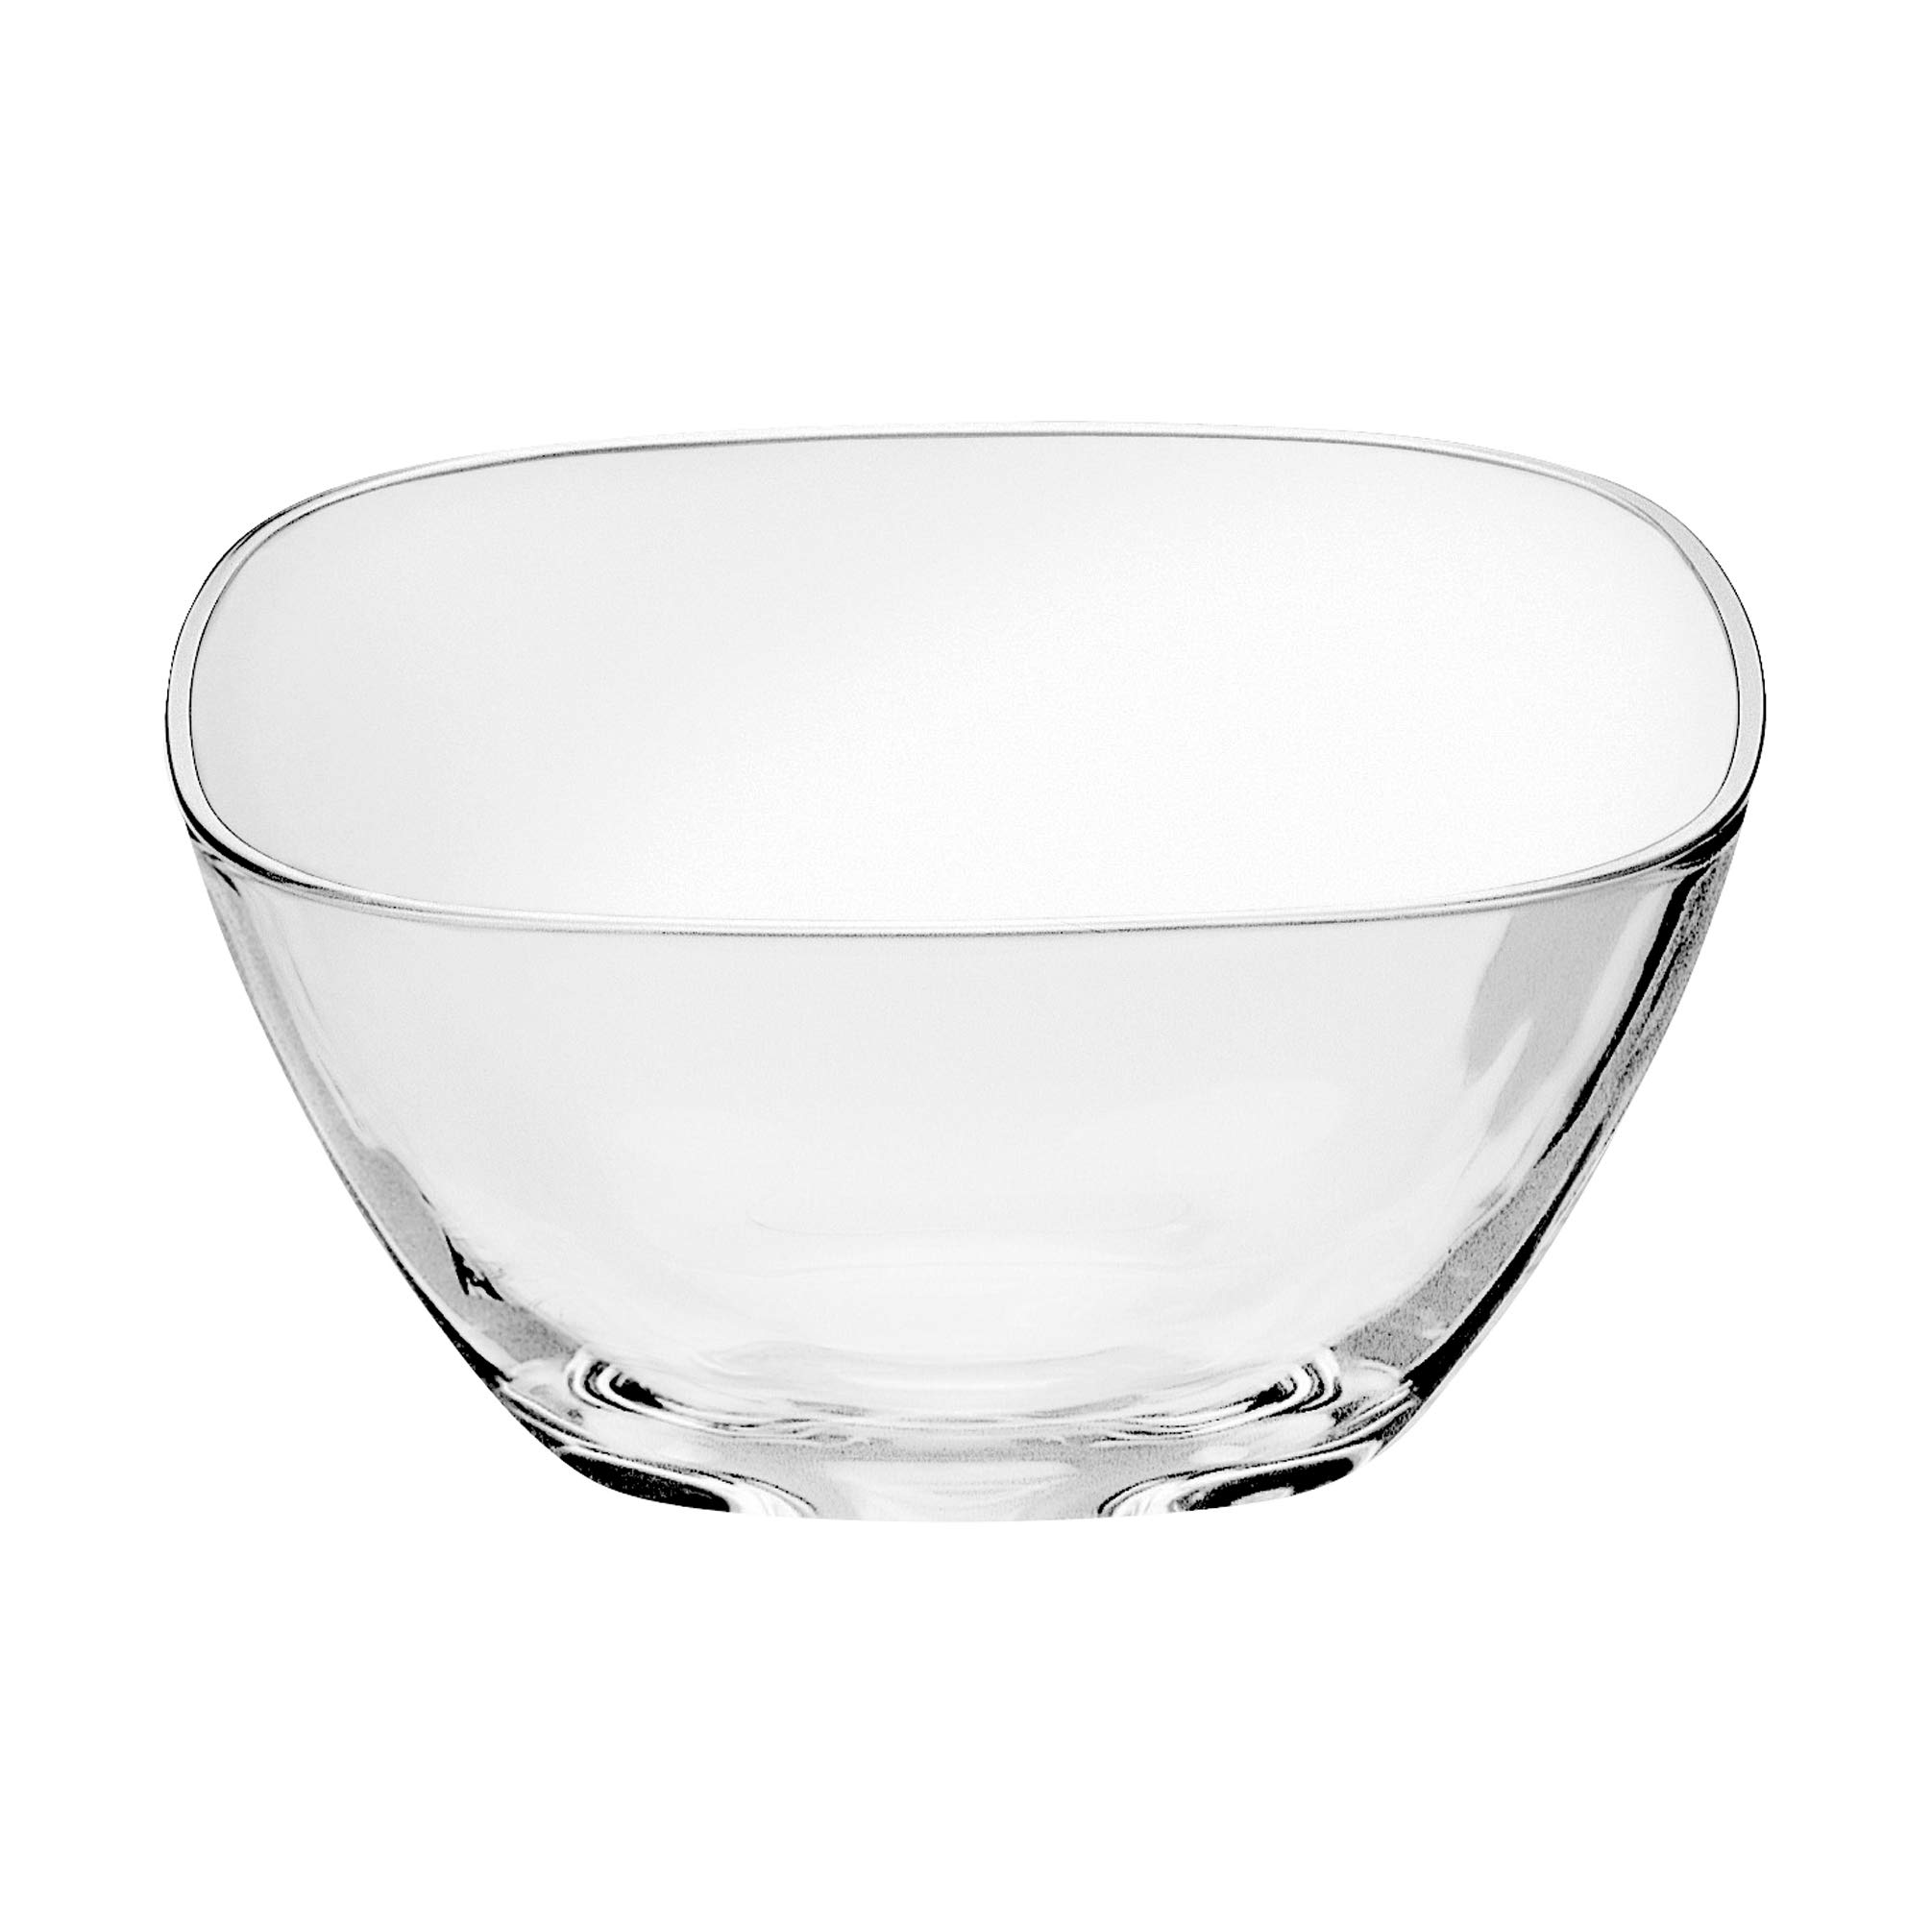 Barski - European Glass - Small Fruit/Nut/Dessert Bowl - 5.5" Square - Set of 6 - Made in Europe